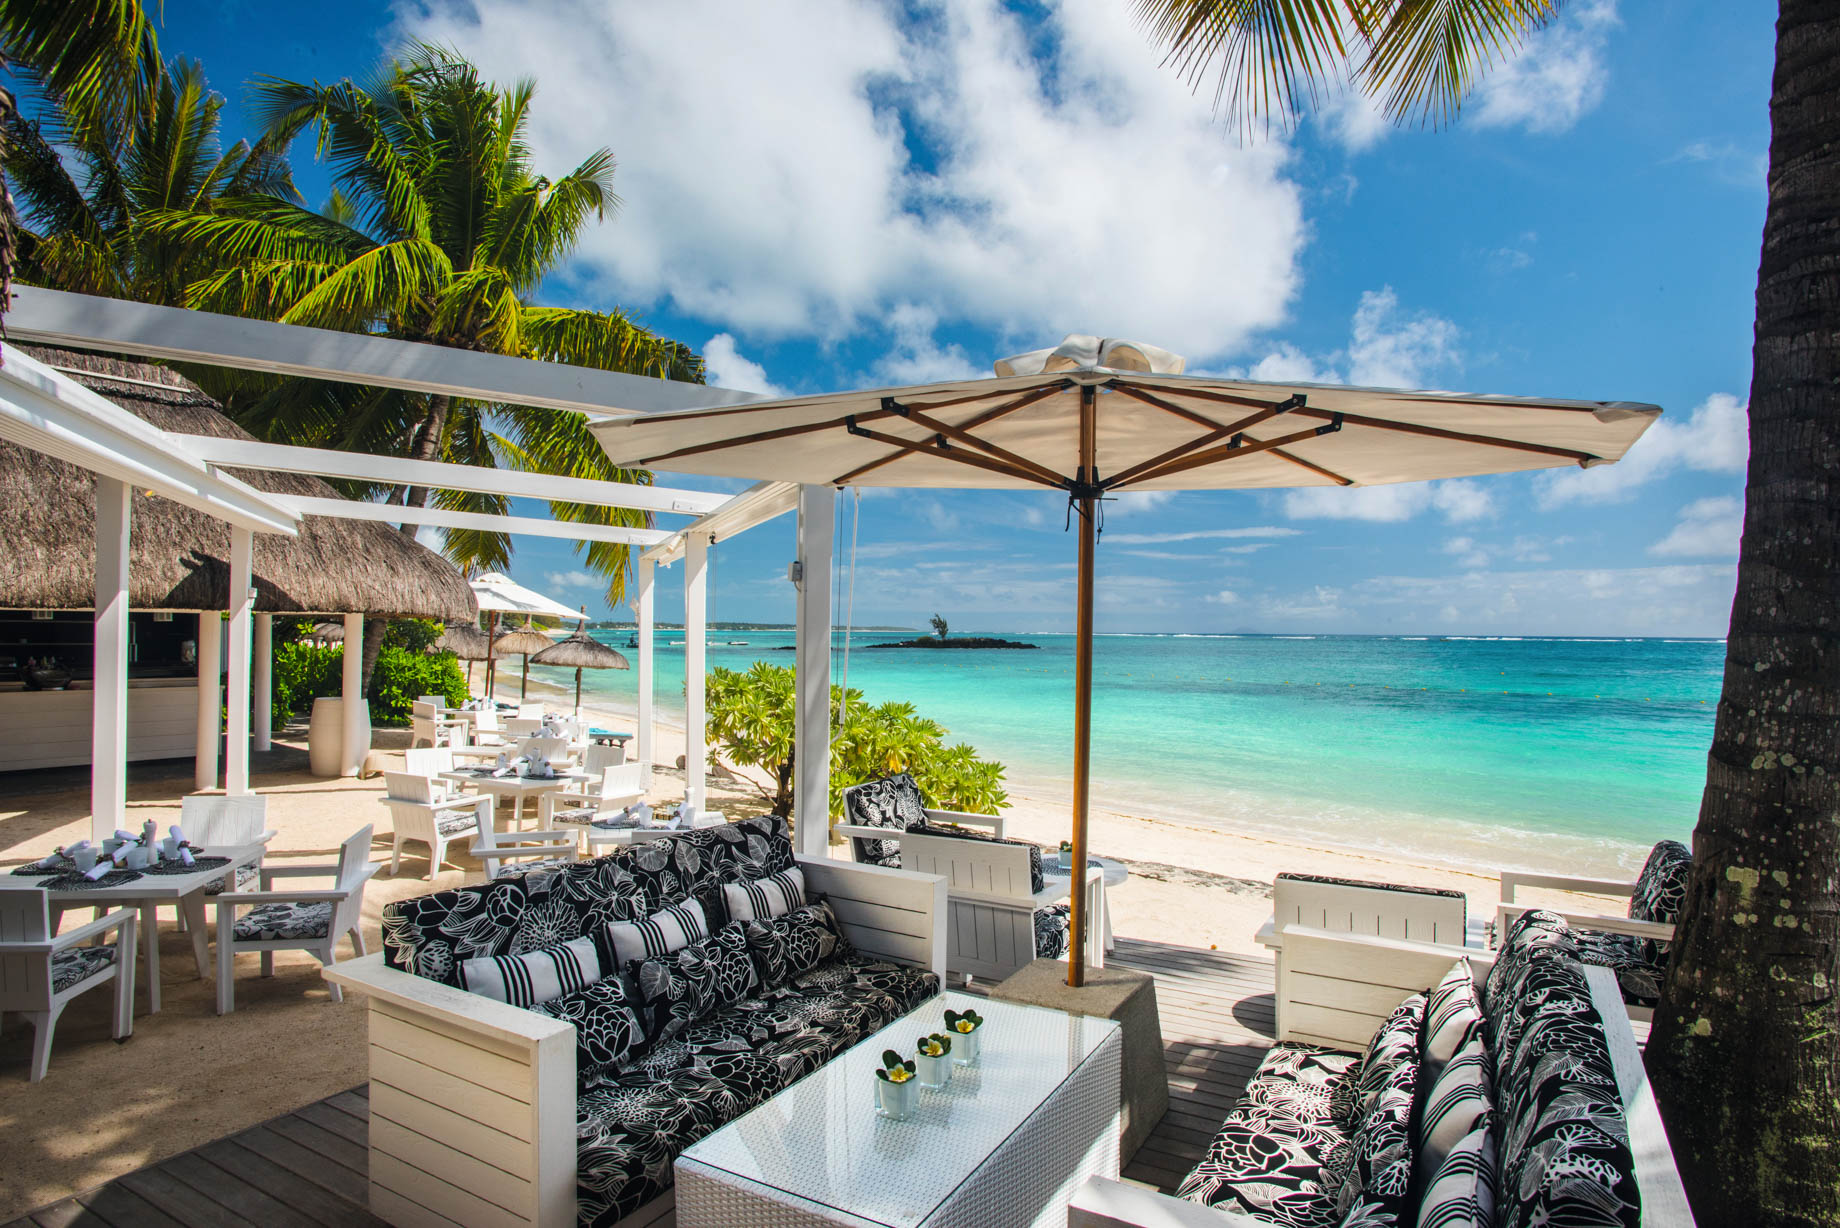 Constance Belle Mare Plage Resort – Mauritius – Lakaze Restaurant Beach and Ocean View